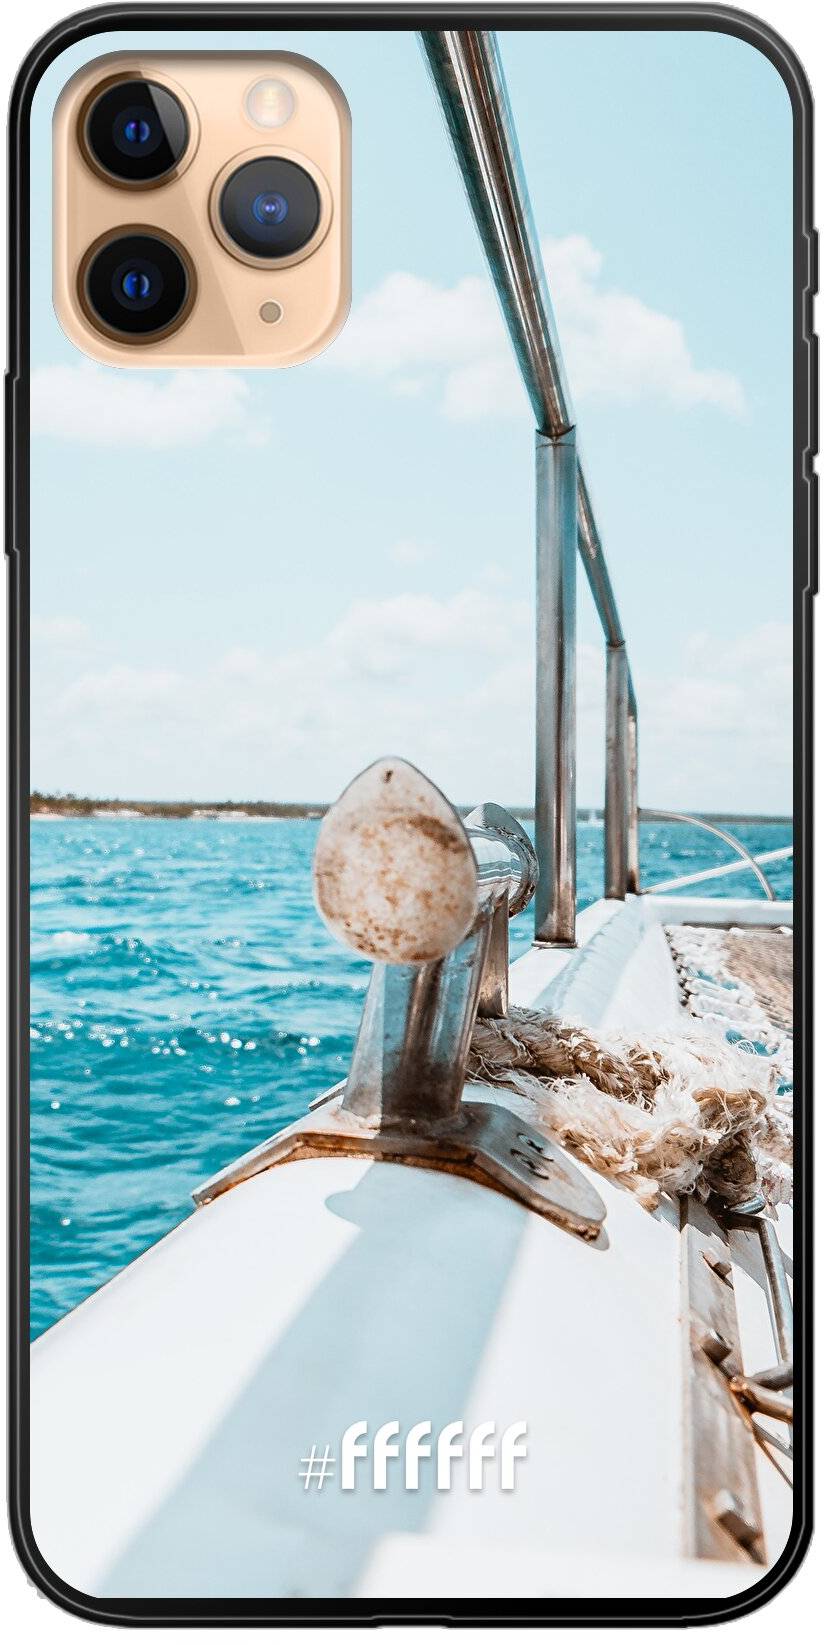 Sailing iPhone 11 Pro Max